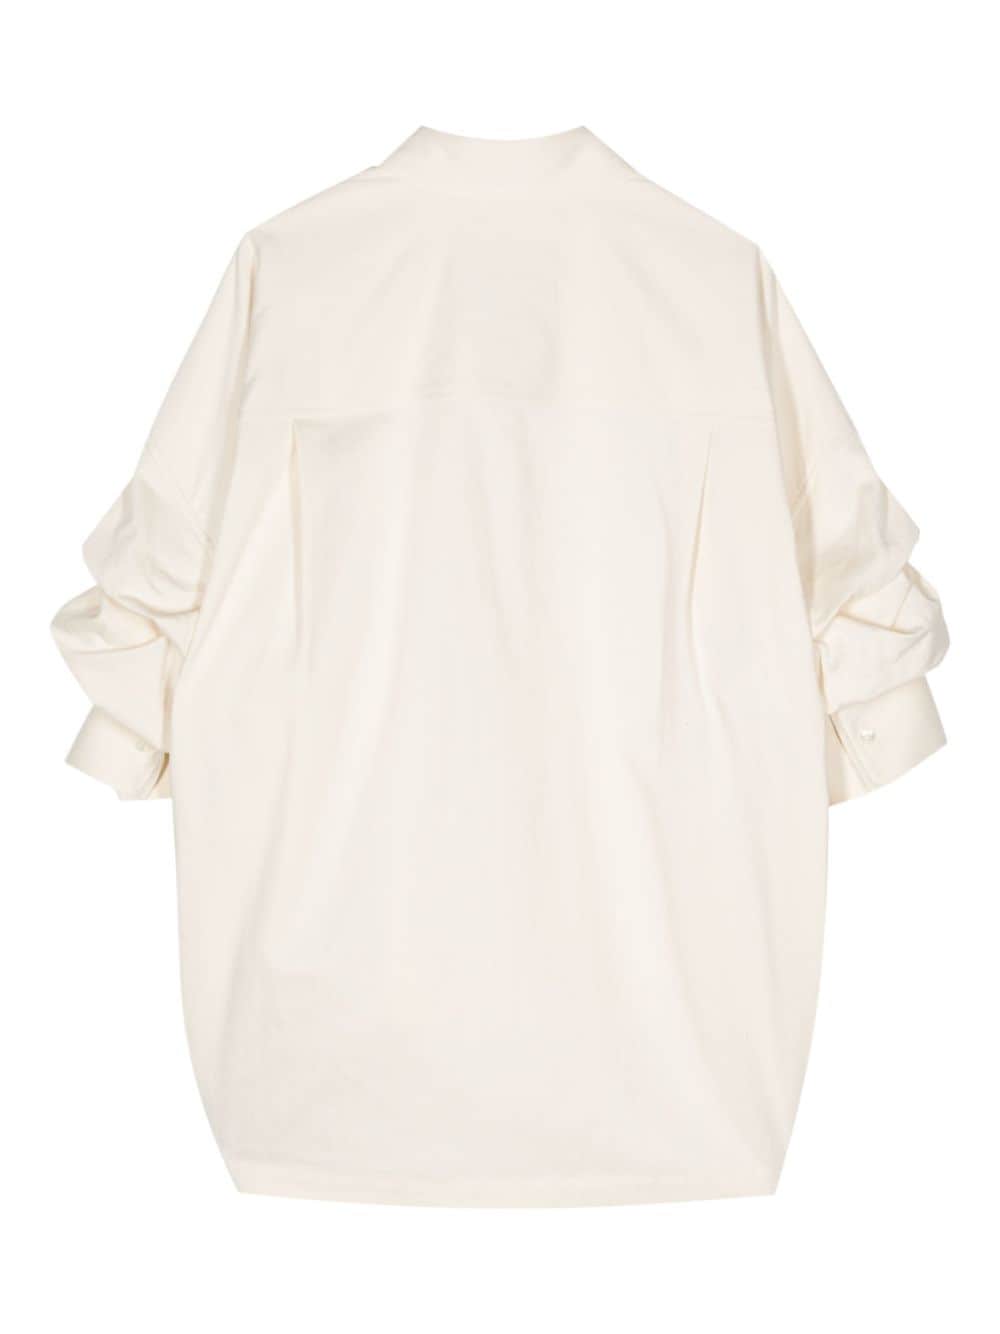 Maison Mihara Yasuhiro Katoenen blouse met opgerolde mouwen - Wit